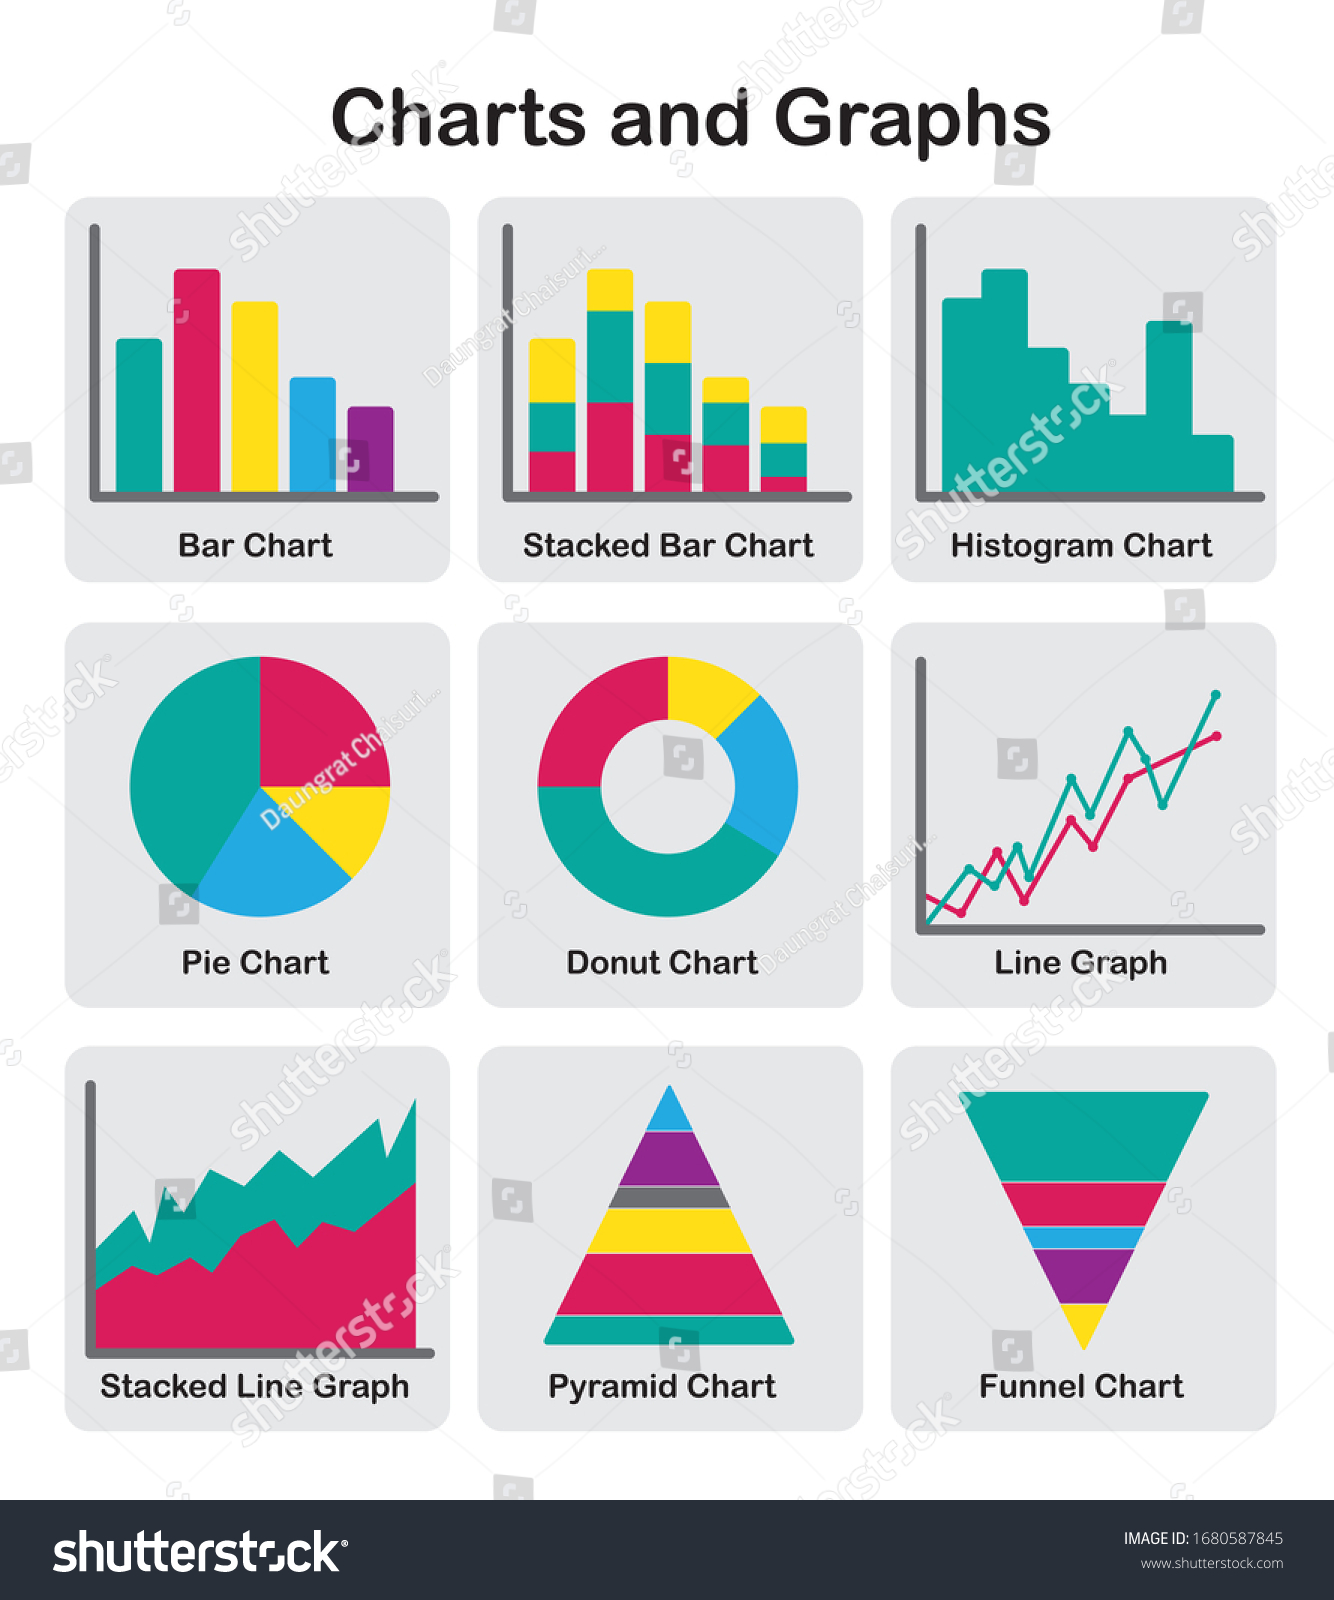 shapes of graphs names